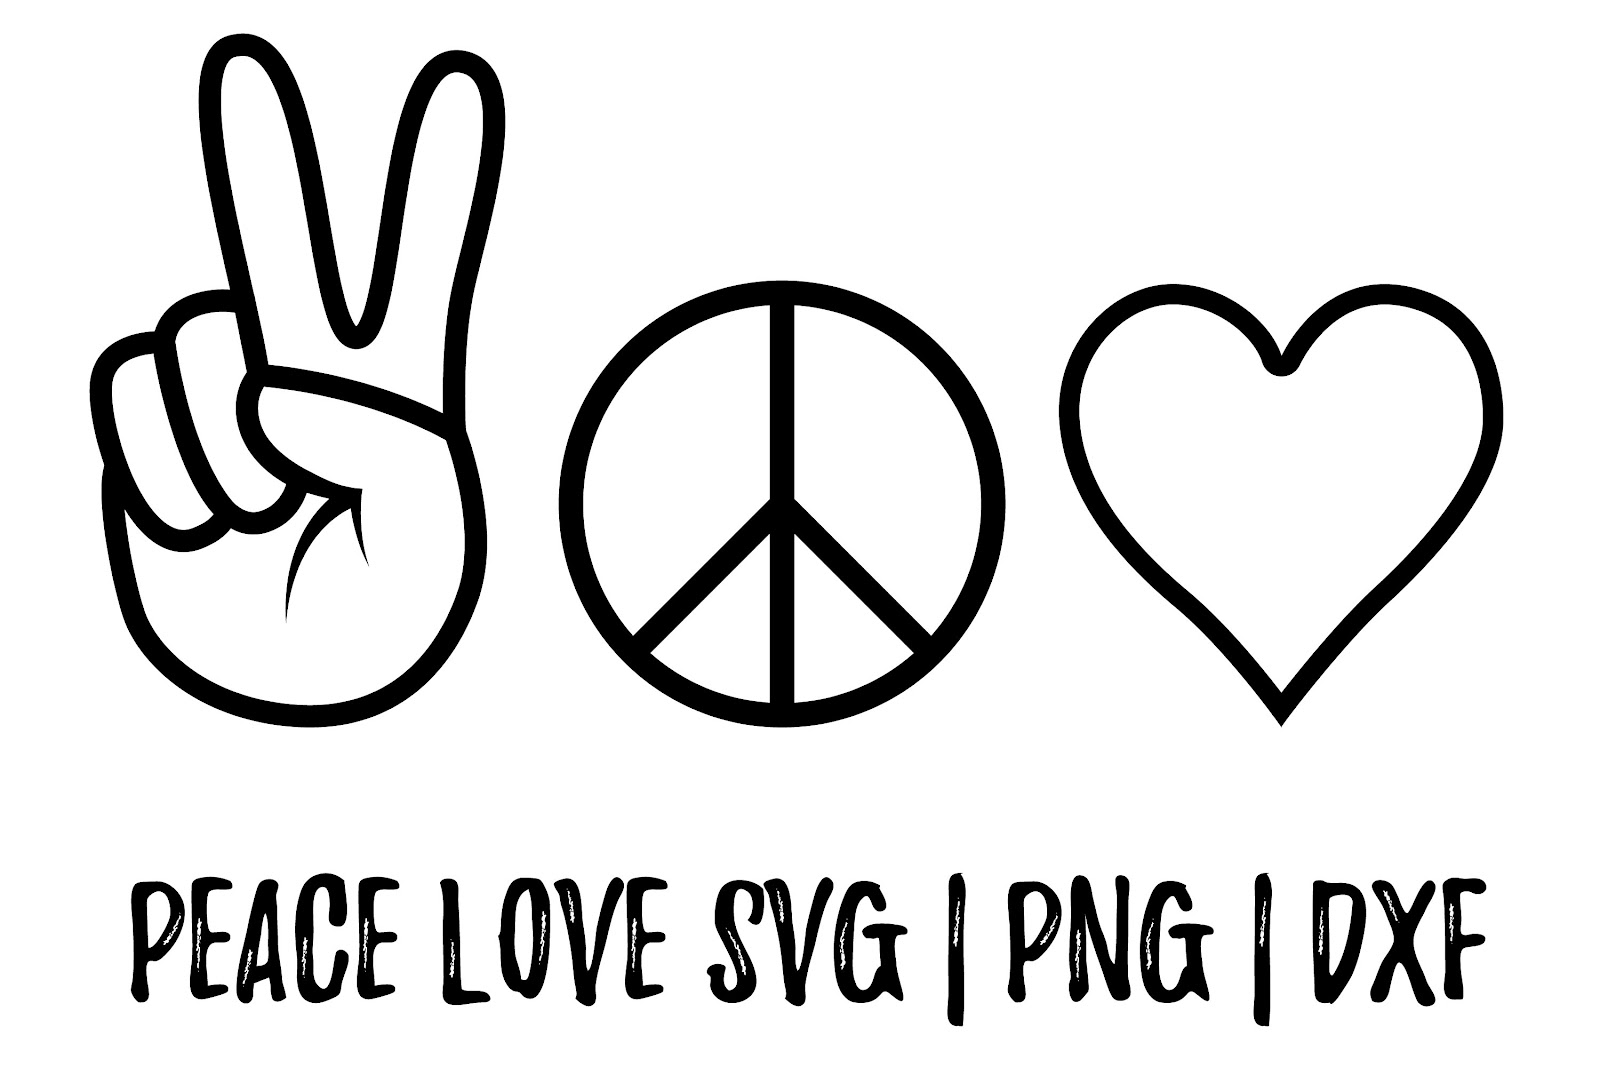 129 Hand Peace Love graphic design